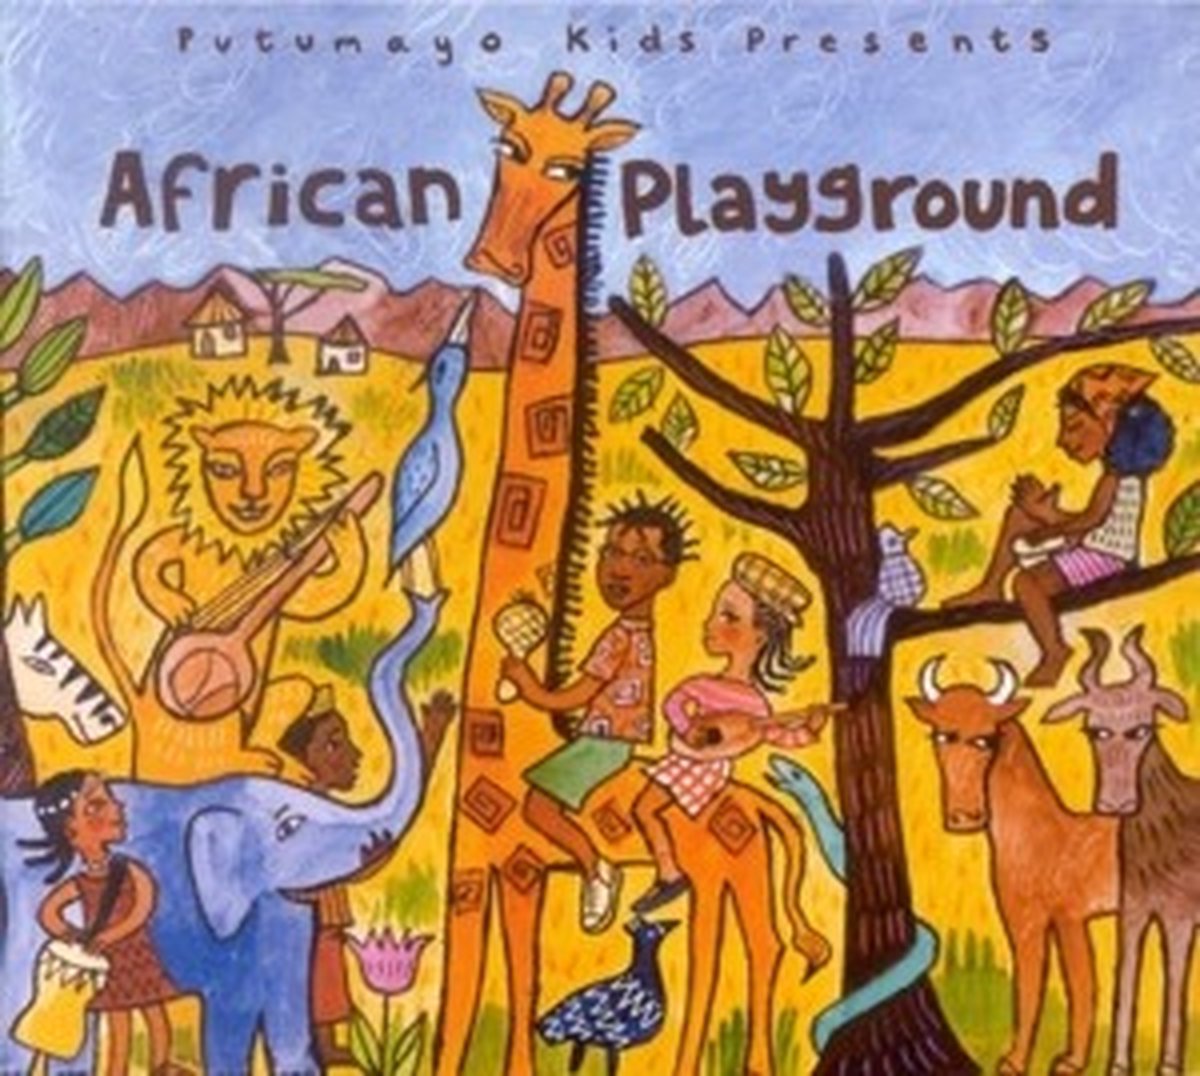 Putumayo Presents - African Playground (CD) - various artists